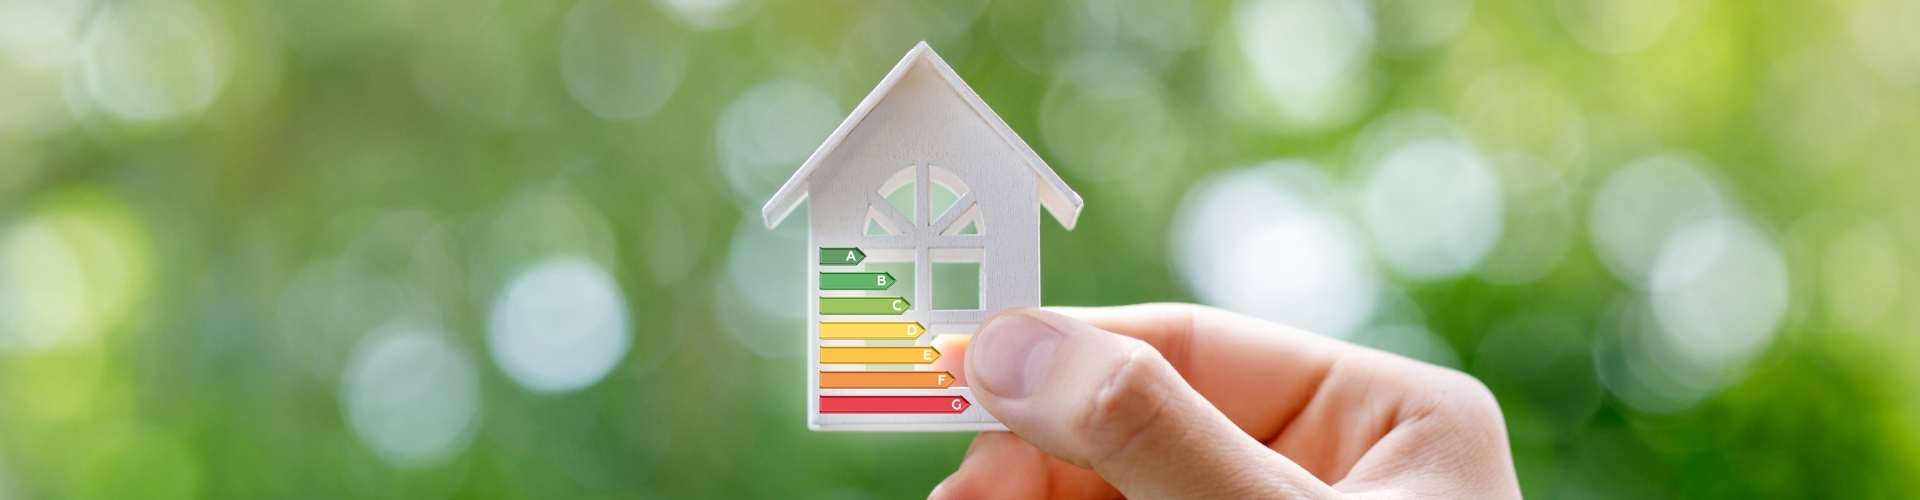 energy efficiency blog banner